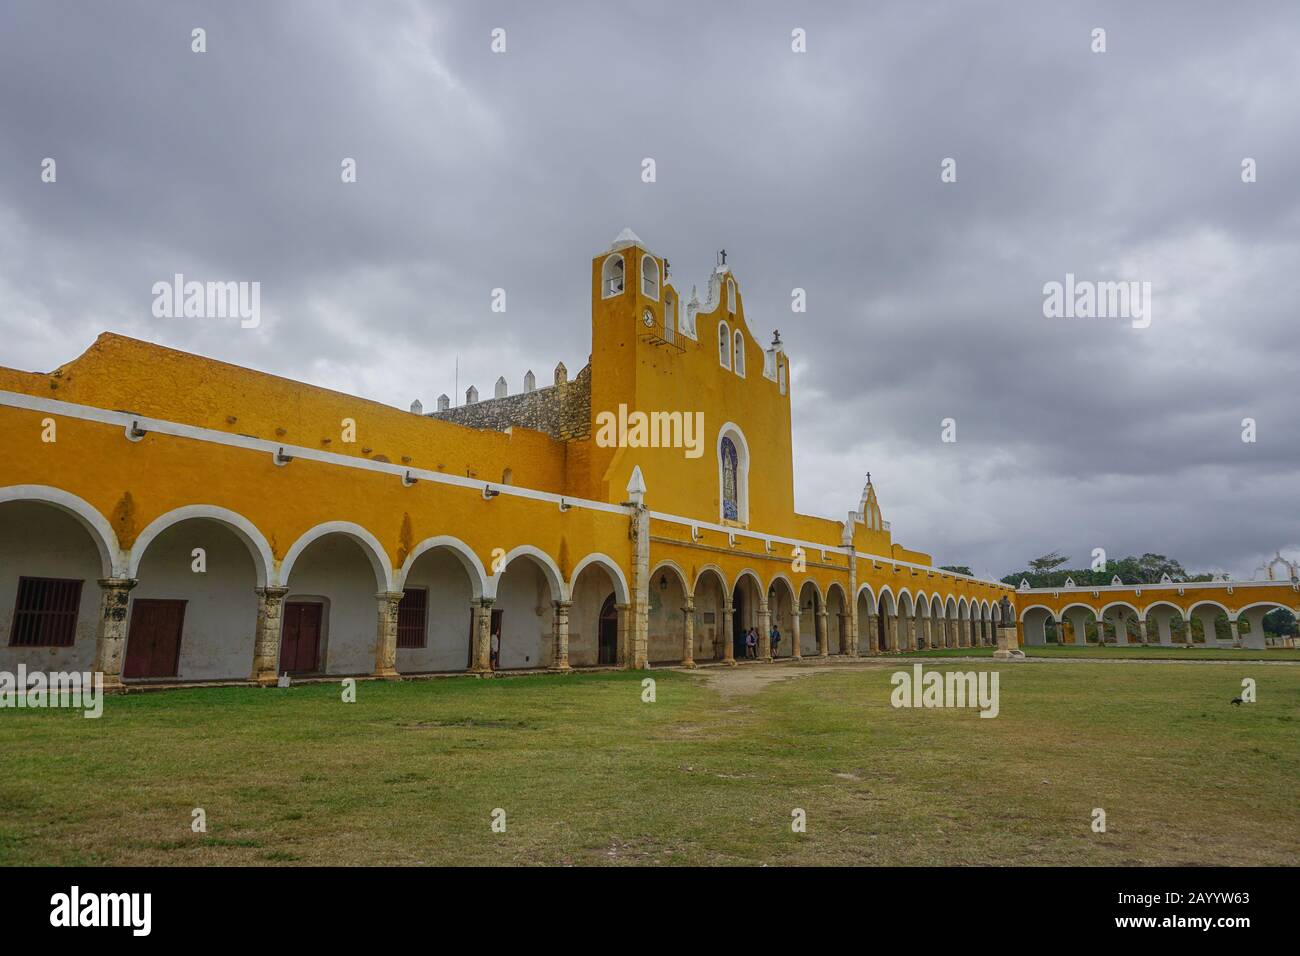 Izamal, Yucatán, Mexico: Franciscan Monastery and Convent of San Antonio de Padua, built in 1561. Stock Photo